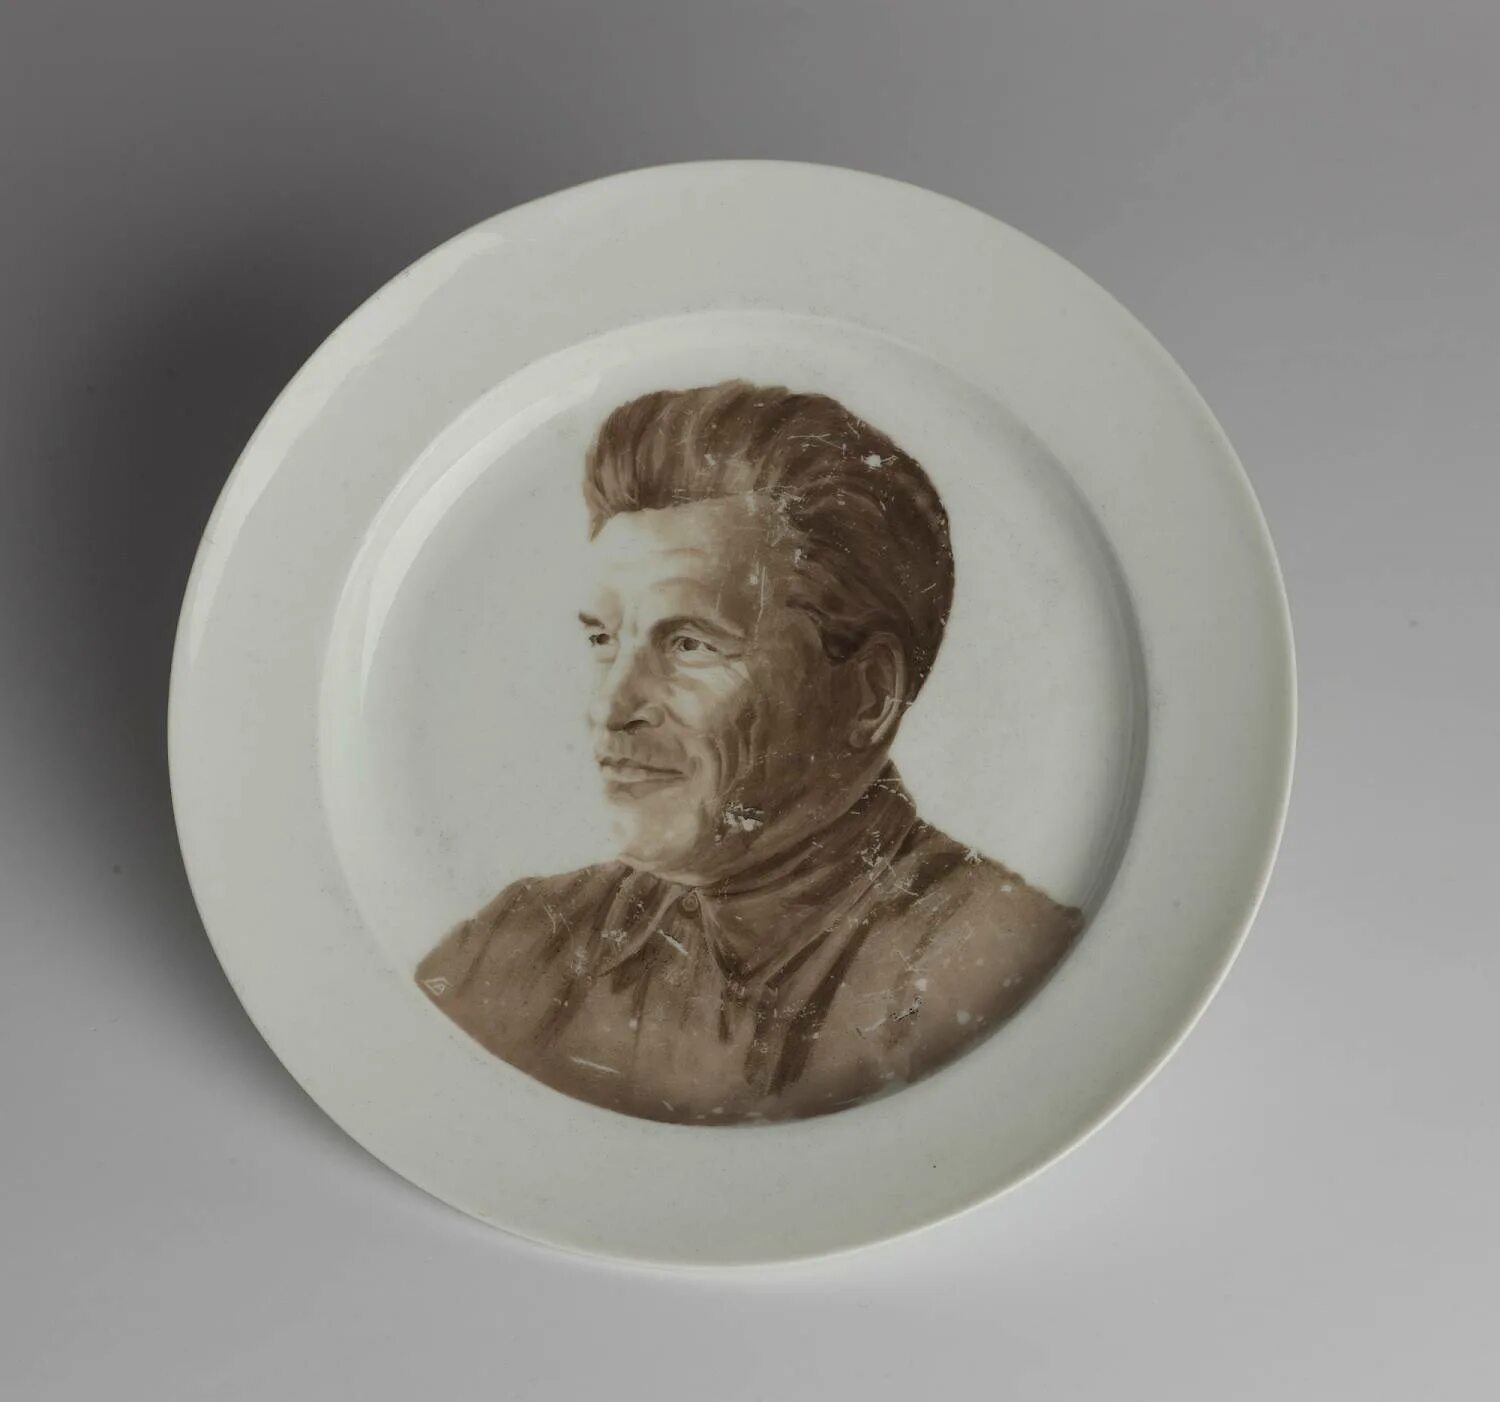 Портрет на тарелке. Тарелка с портретом Сталина. Тарелки с портретами артистов. Тарелки с портретами нацистов. Портрет тарелка